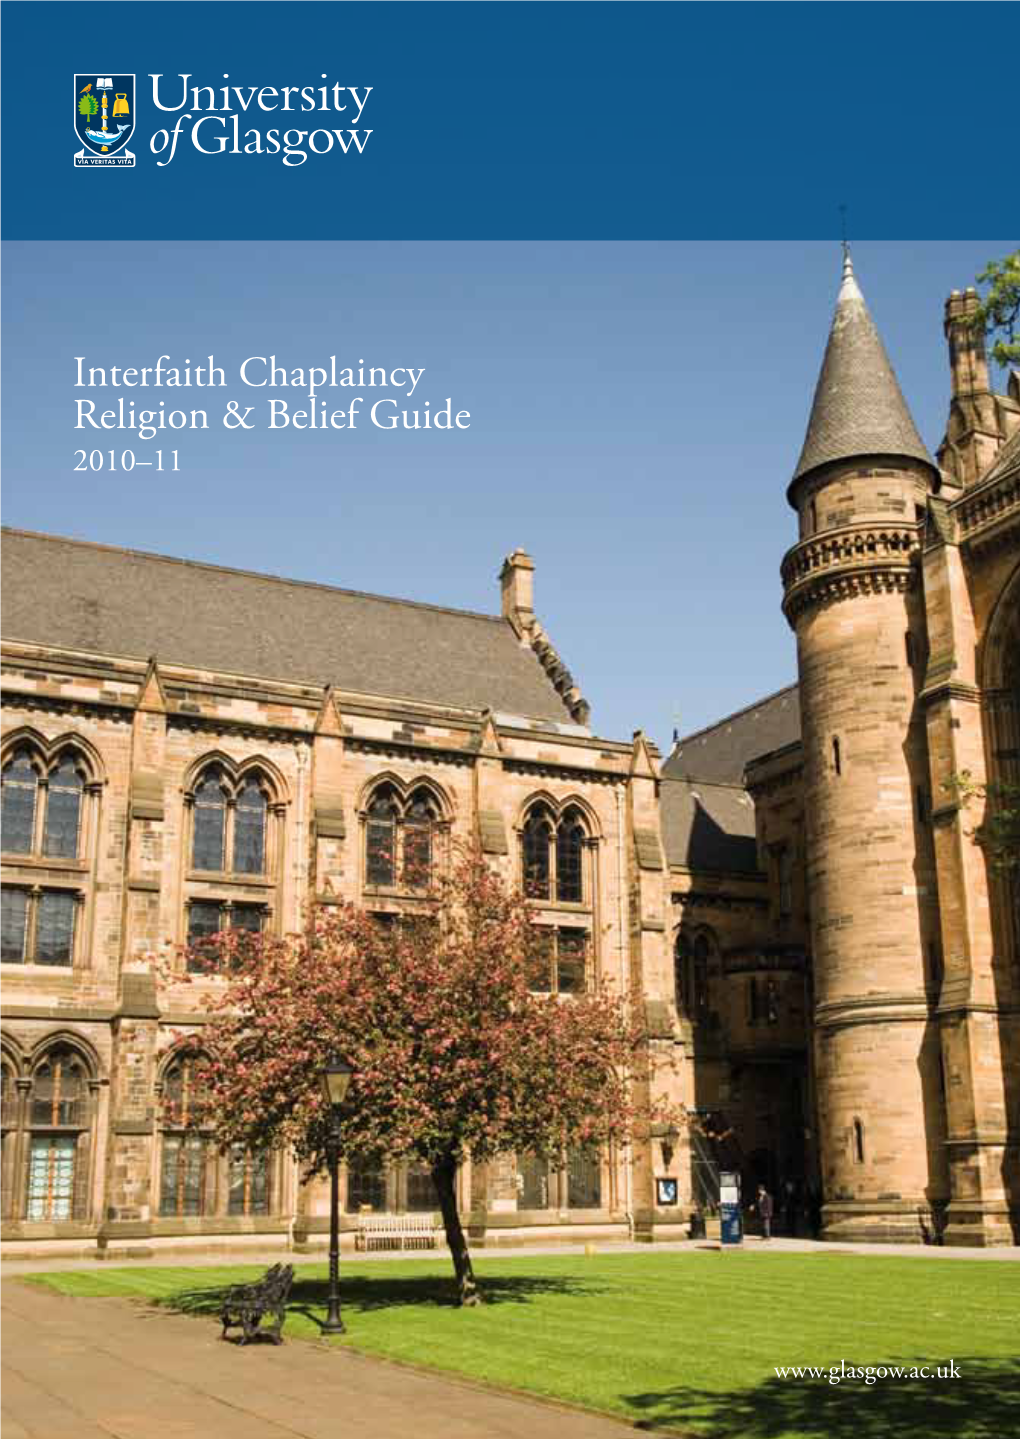 Interfaith Chaplaincy Religion & Belief Guide